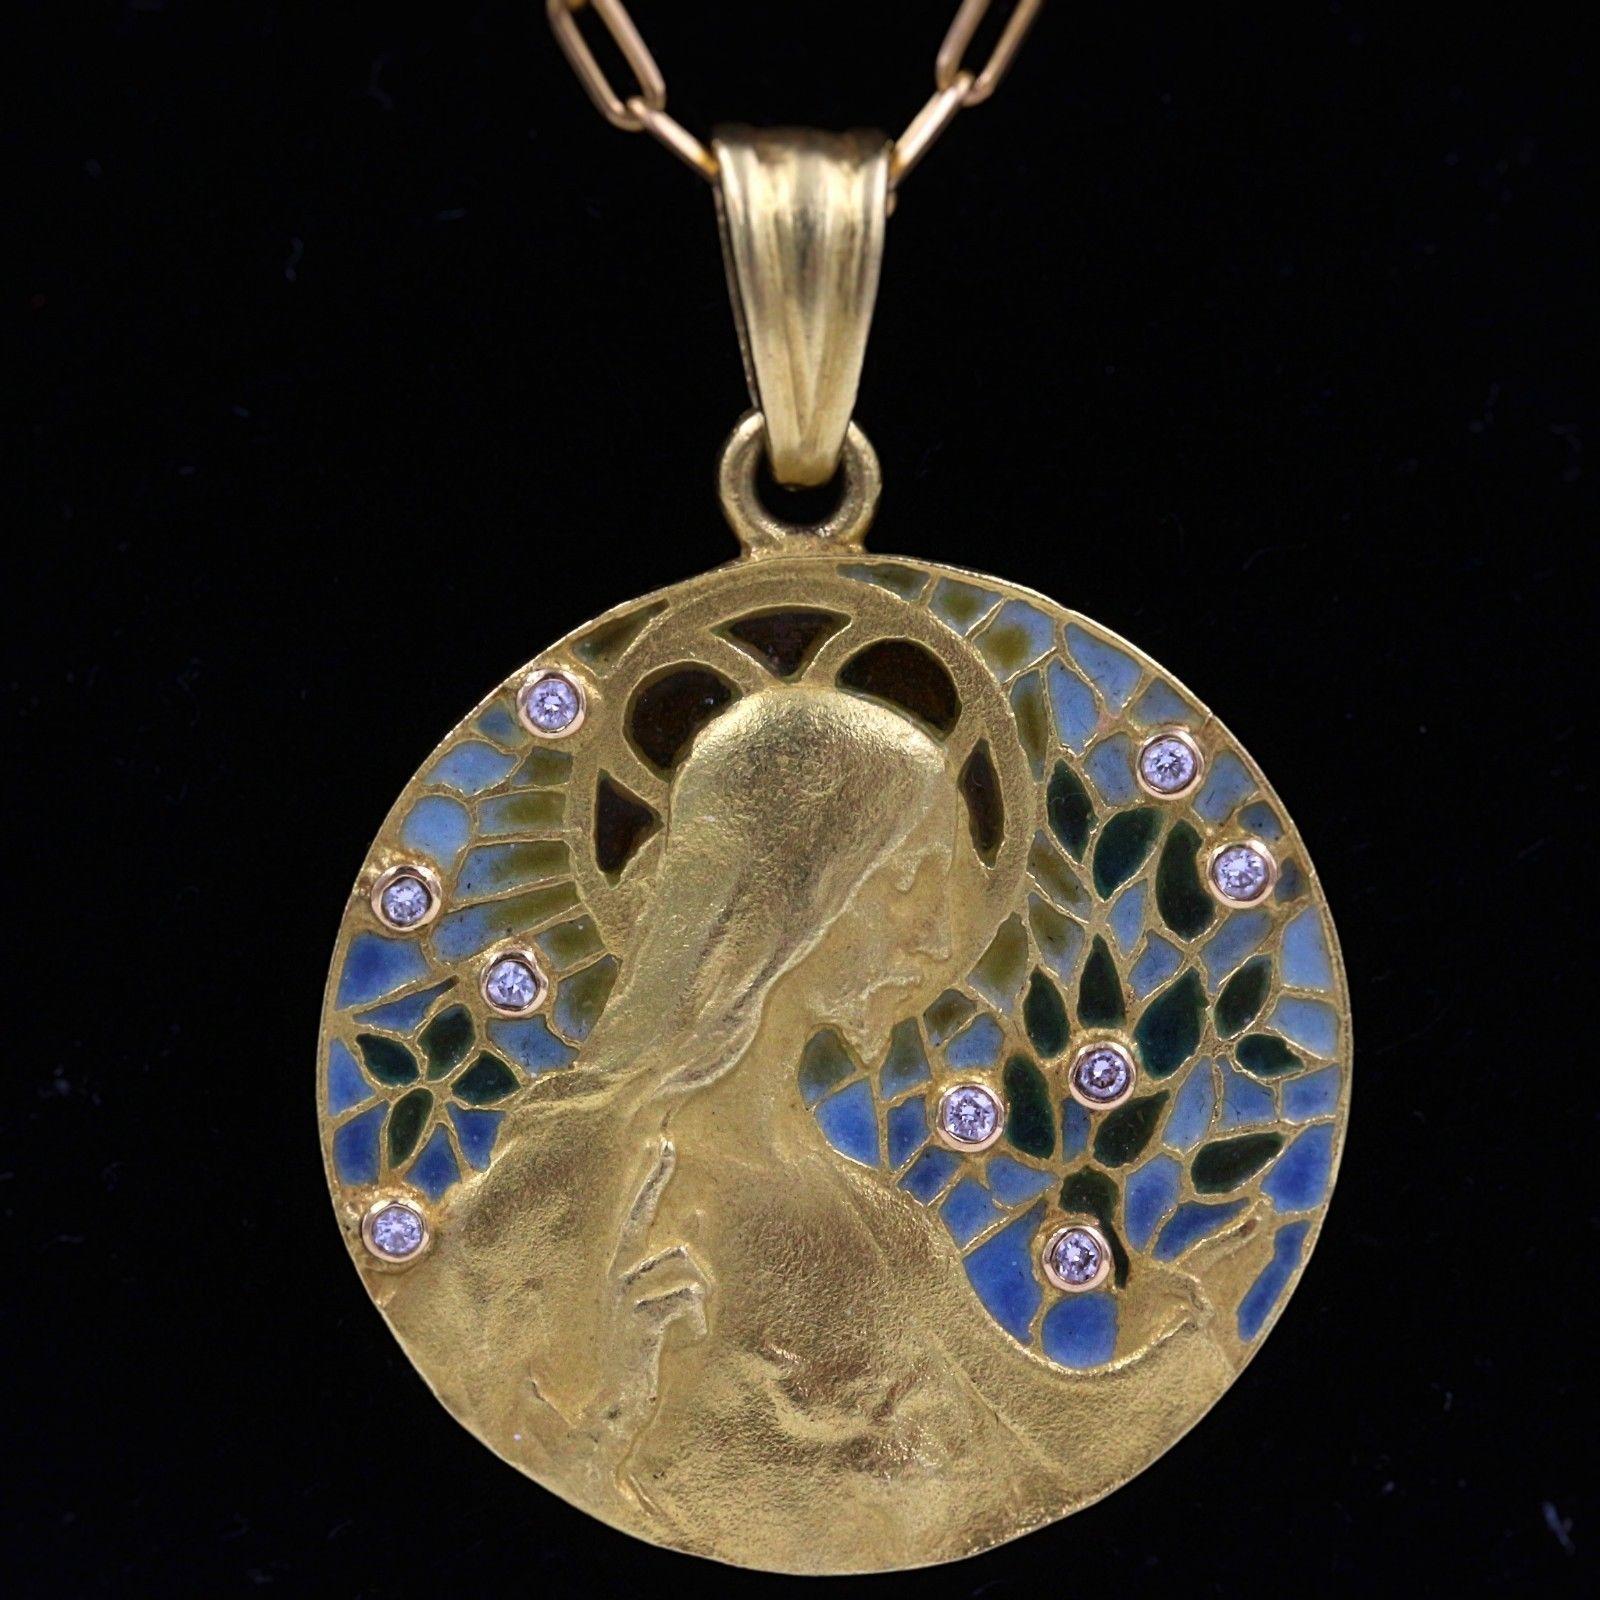 Masriera Jesus Madallion Pendant Necklace with Diamonds in 18 Karat Yellow Gold 4